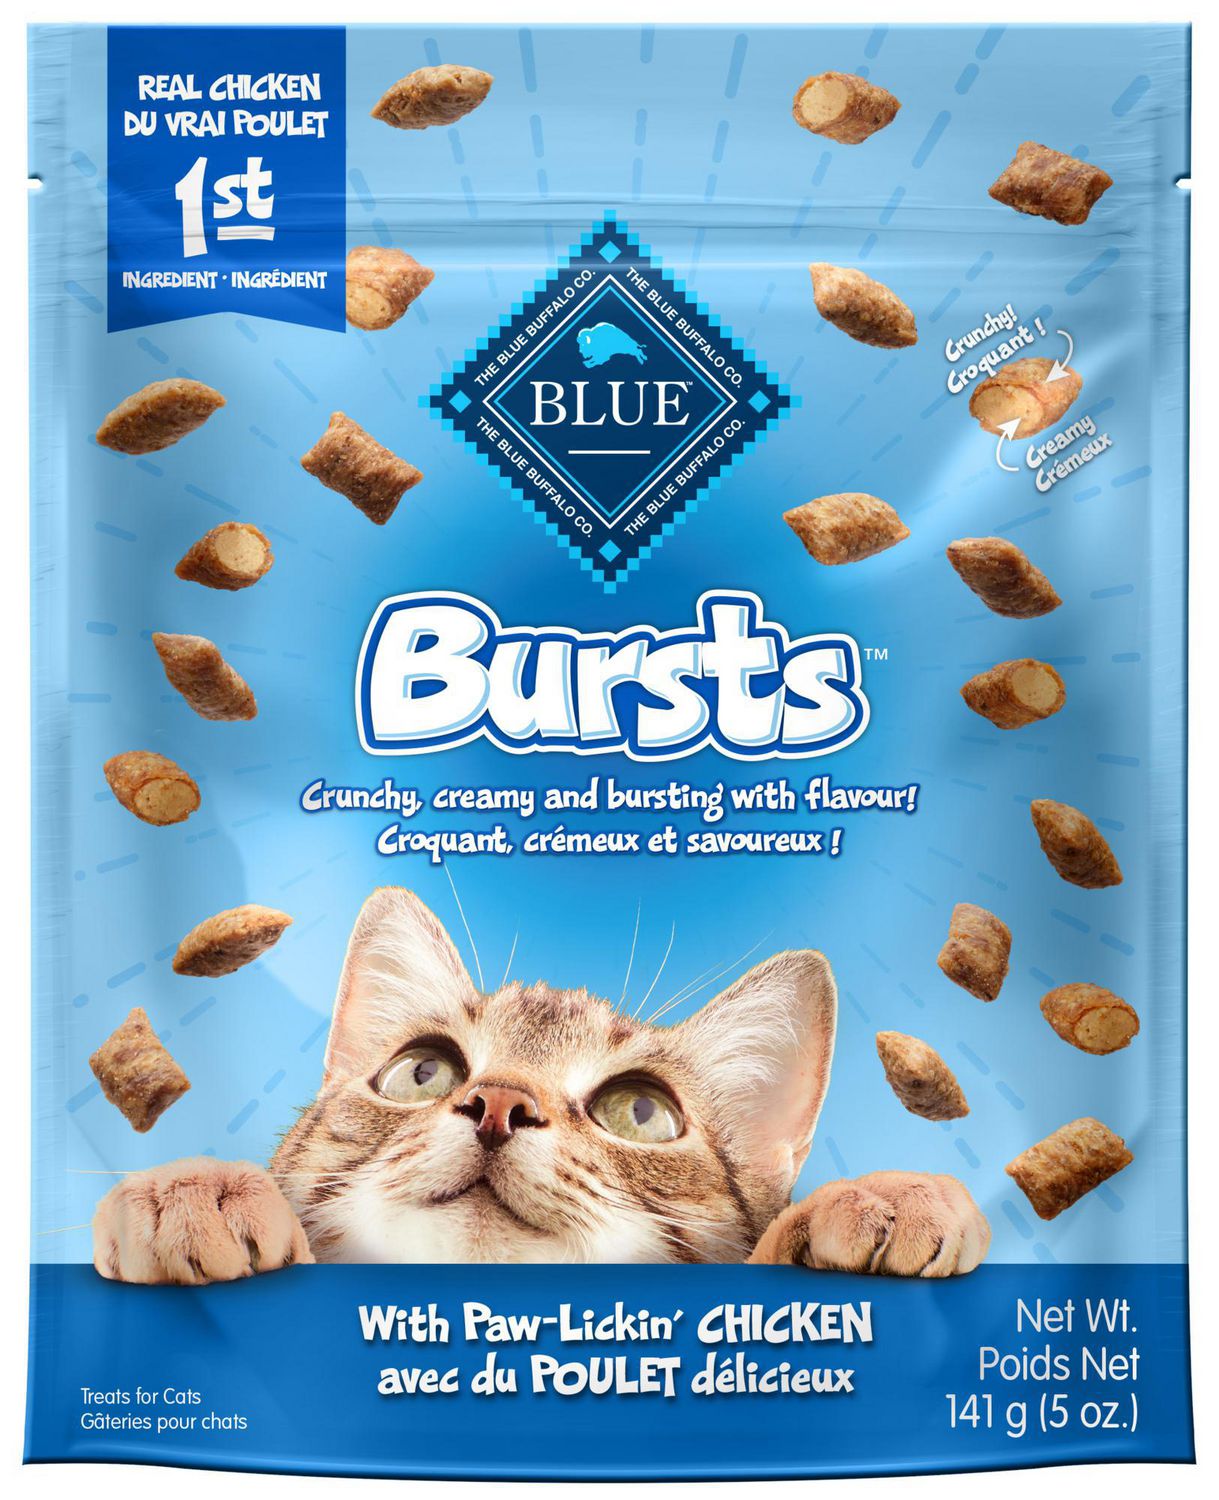 BLUE Bursts PawLickin' Chicken Cat Treats Walmart Canada